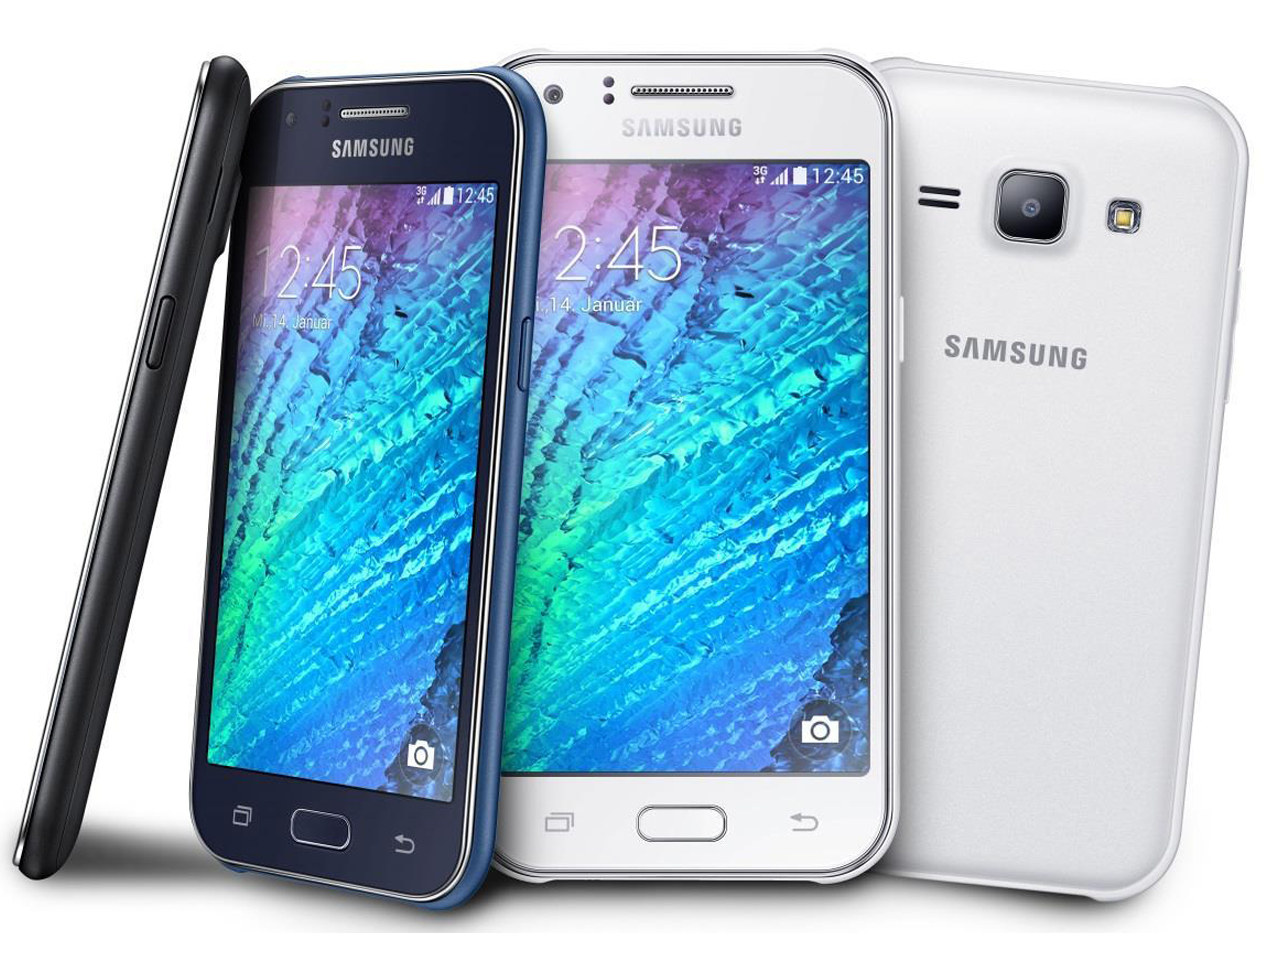 Daftar Harga Samsung Galaxy Seri "J", Seri Harga Murah Mei 2016